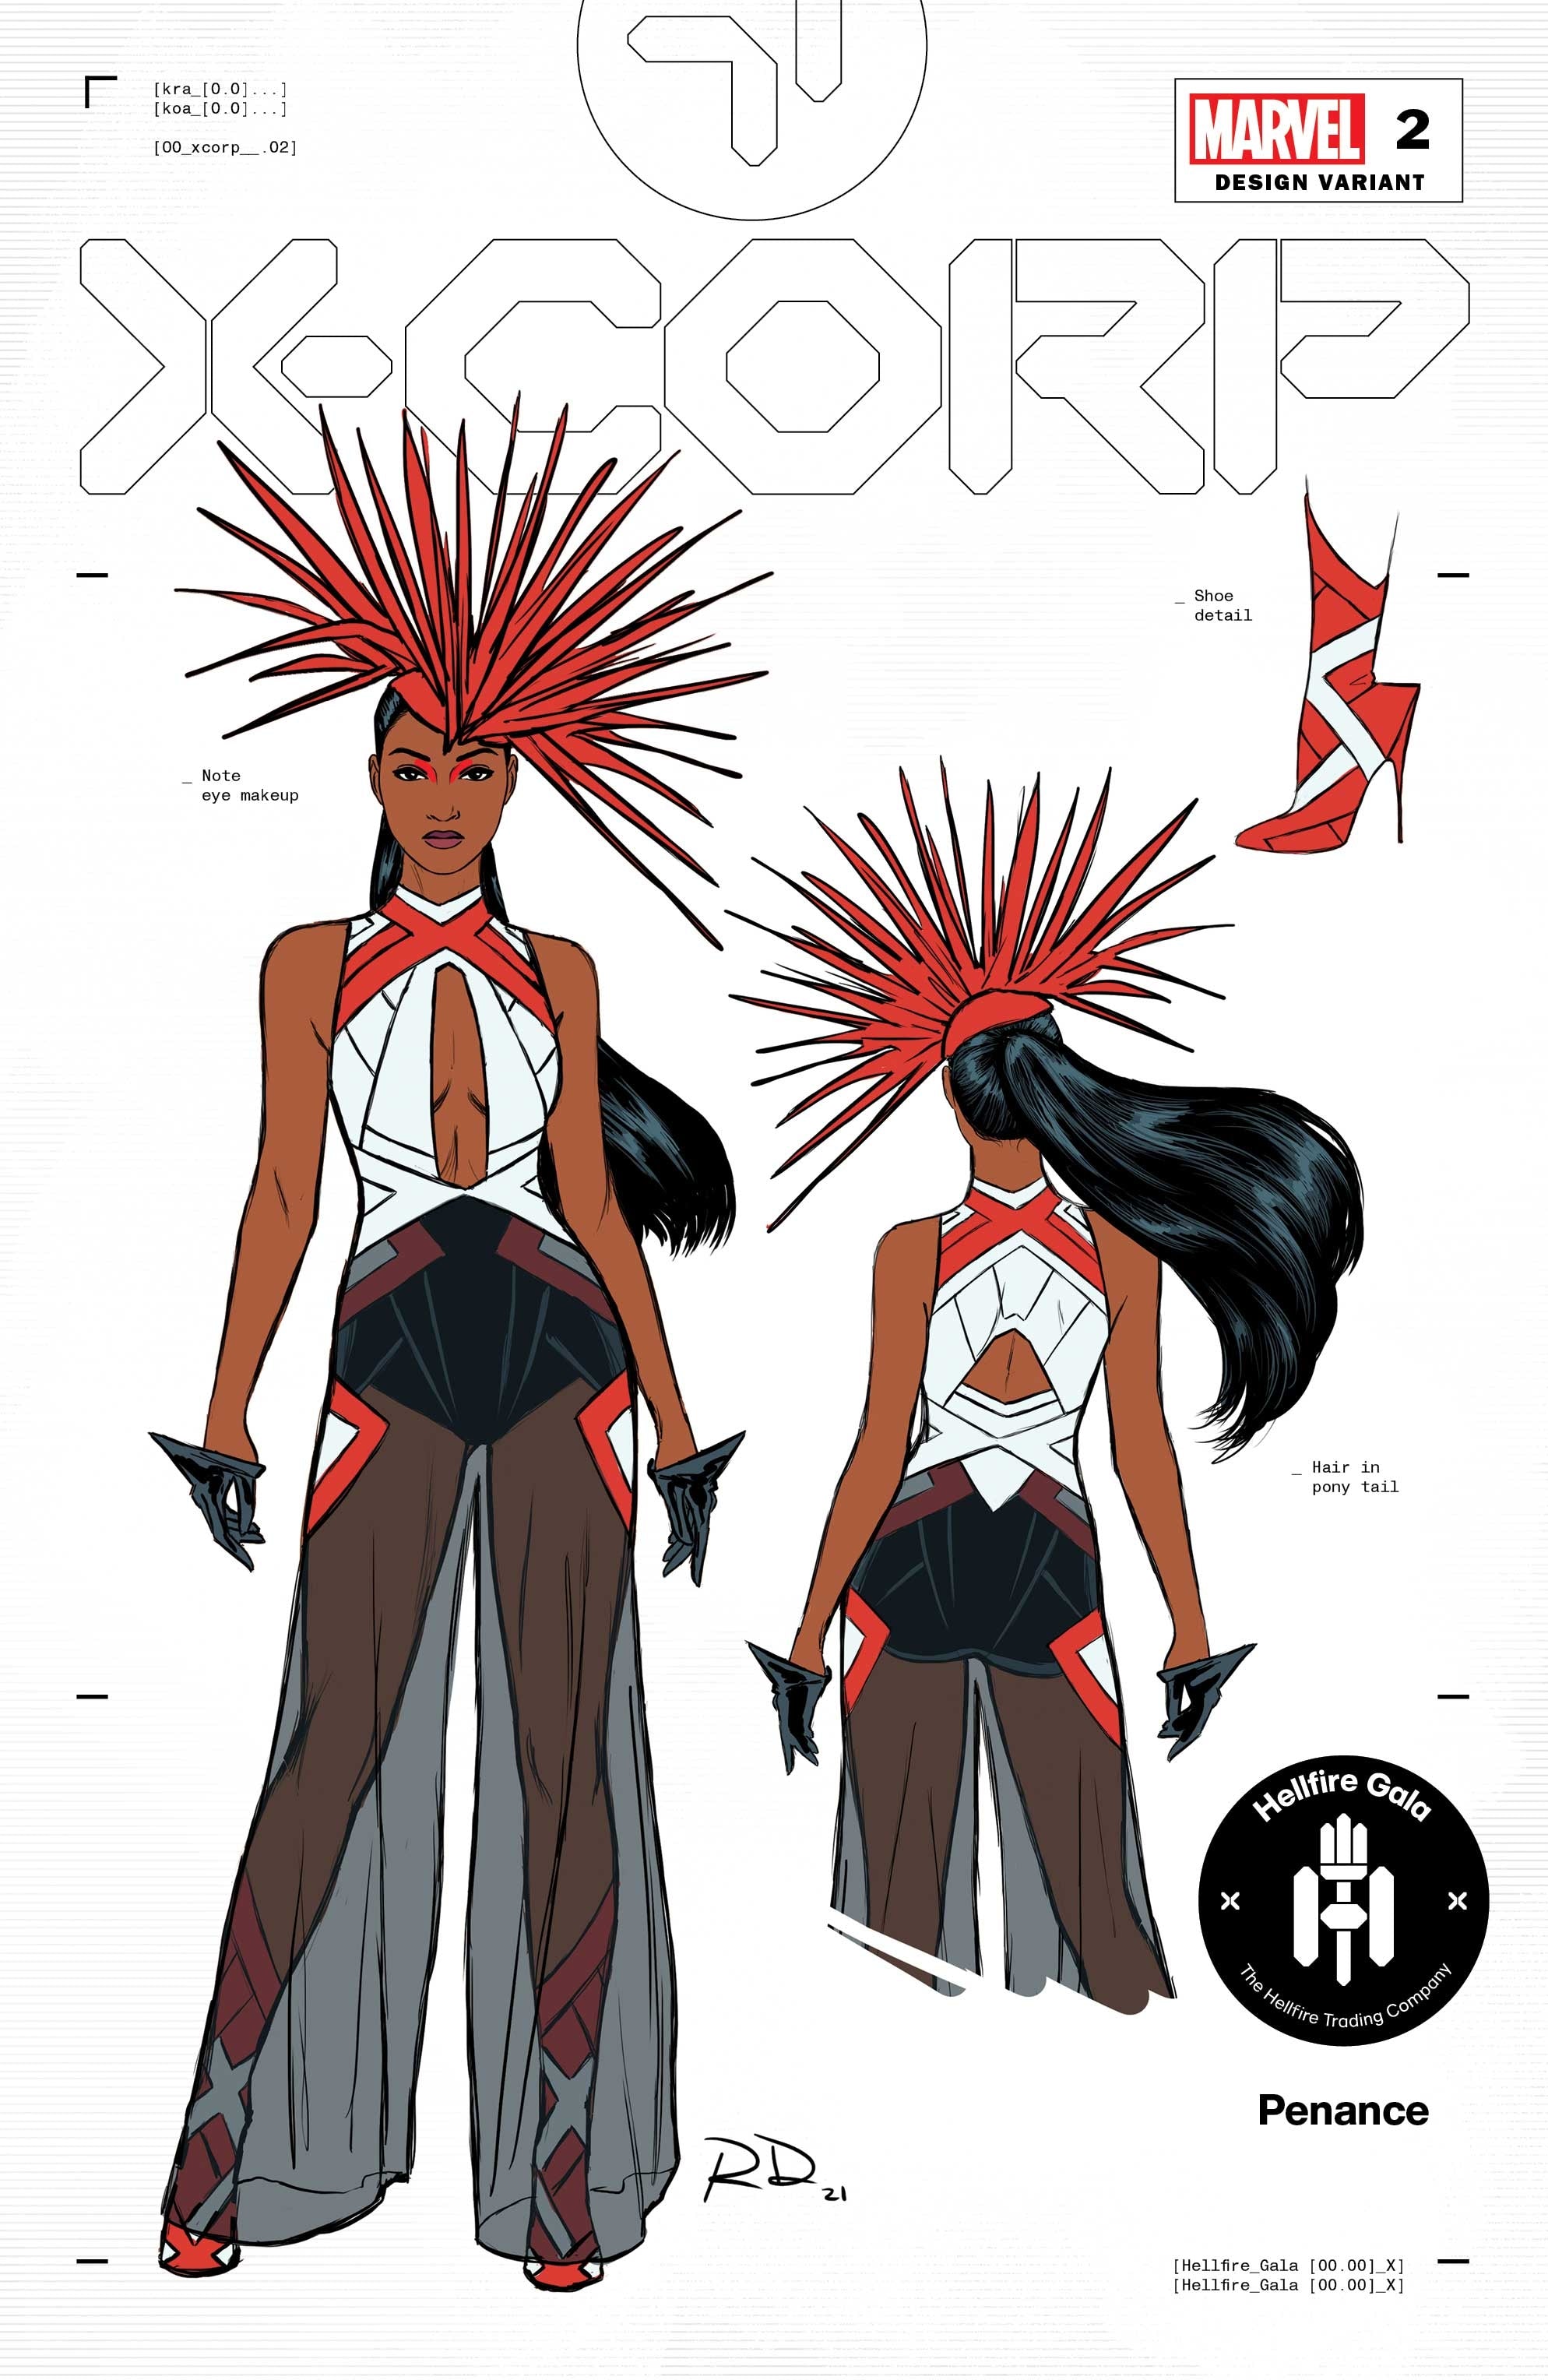 Scarlet Witch #2 Russell Dauterman Main Cvr (Marvel, 2023) NM